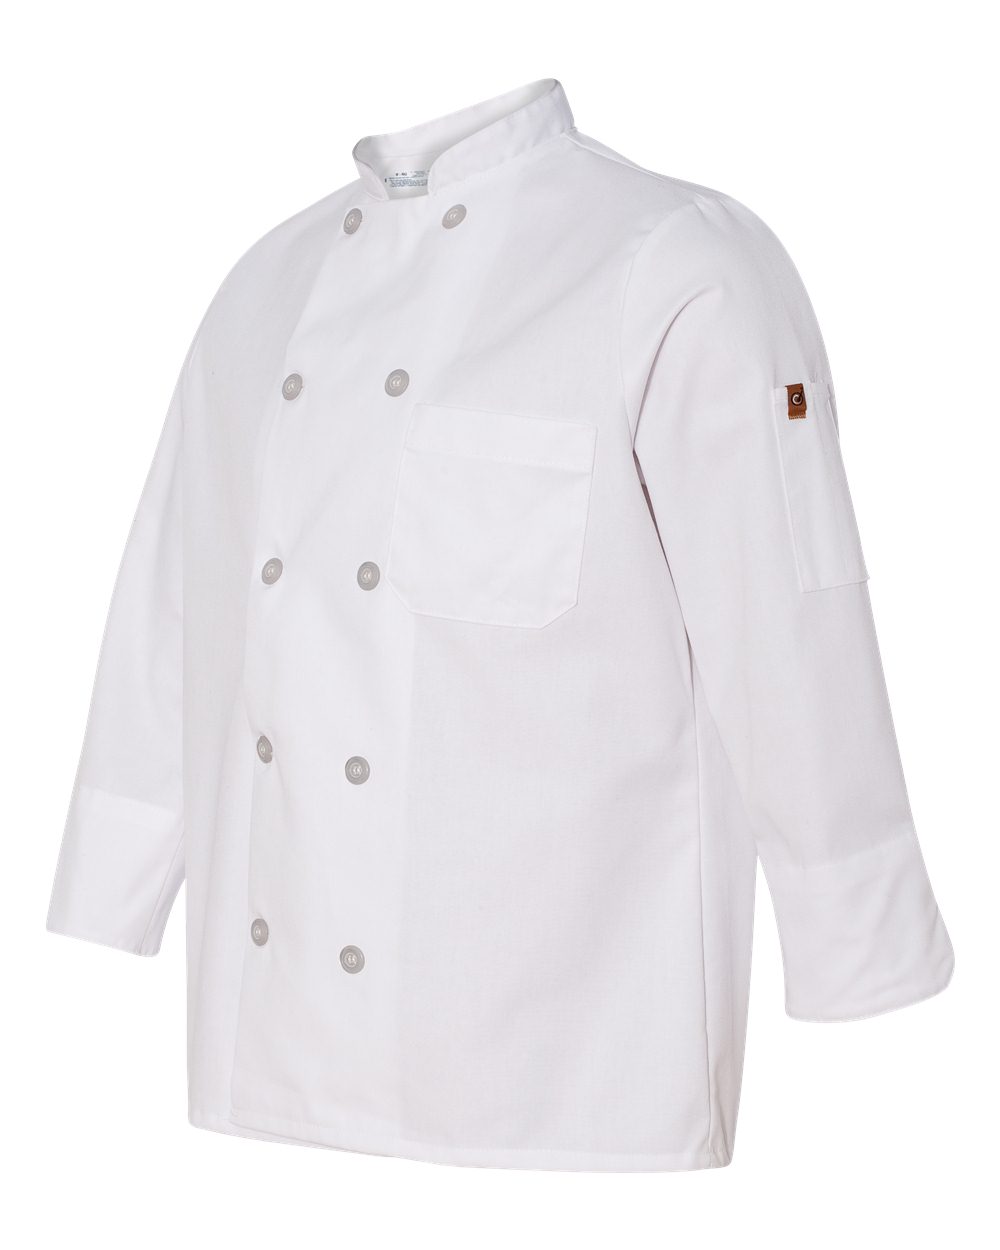 Chef Designs 0401 - Women's Ten Button Chef Coat